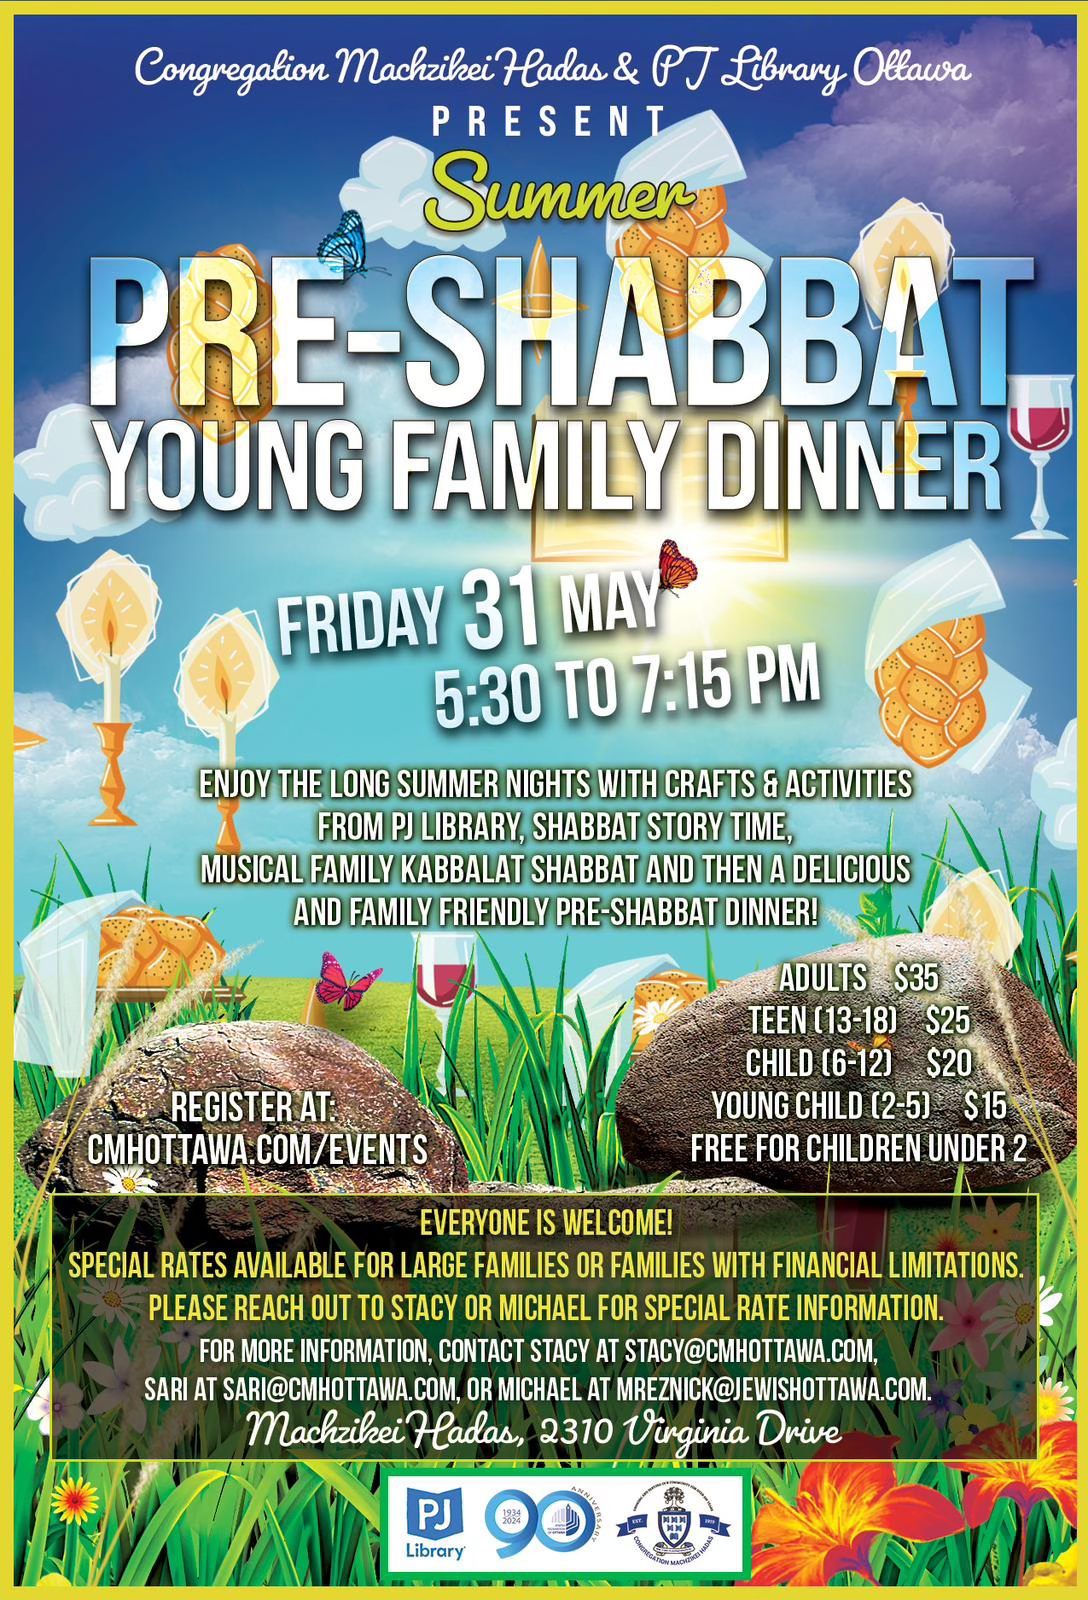 Pre-Shabbat Young Family Dinner